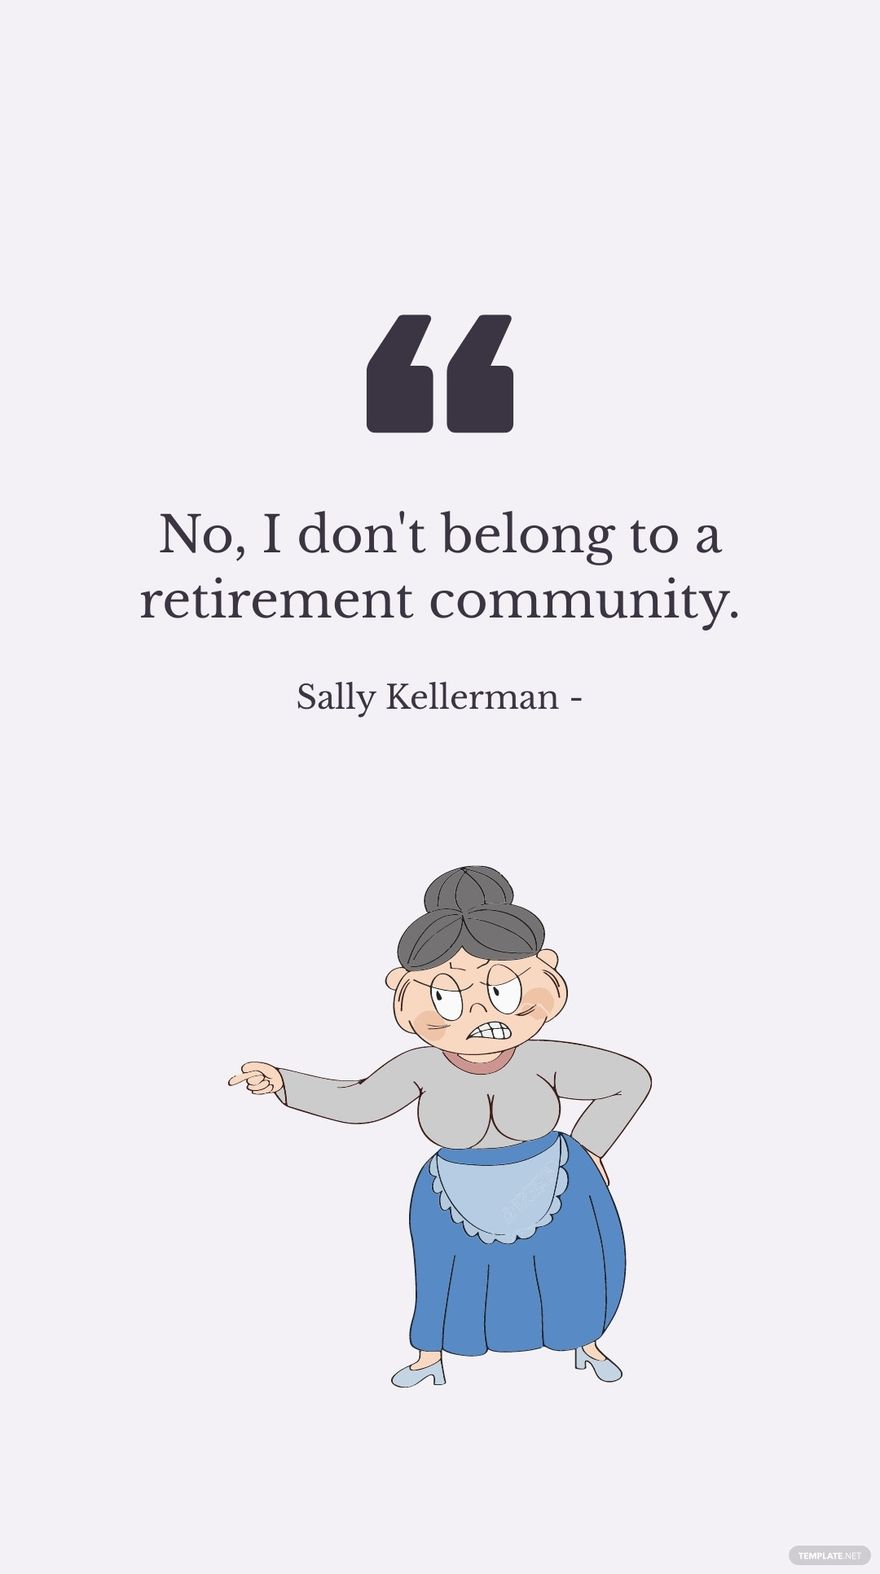 Sally Kellerman - No, I don't belong to a retirement community. in JPG